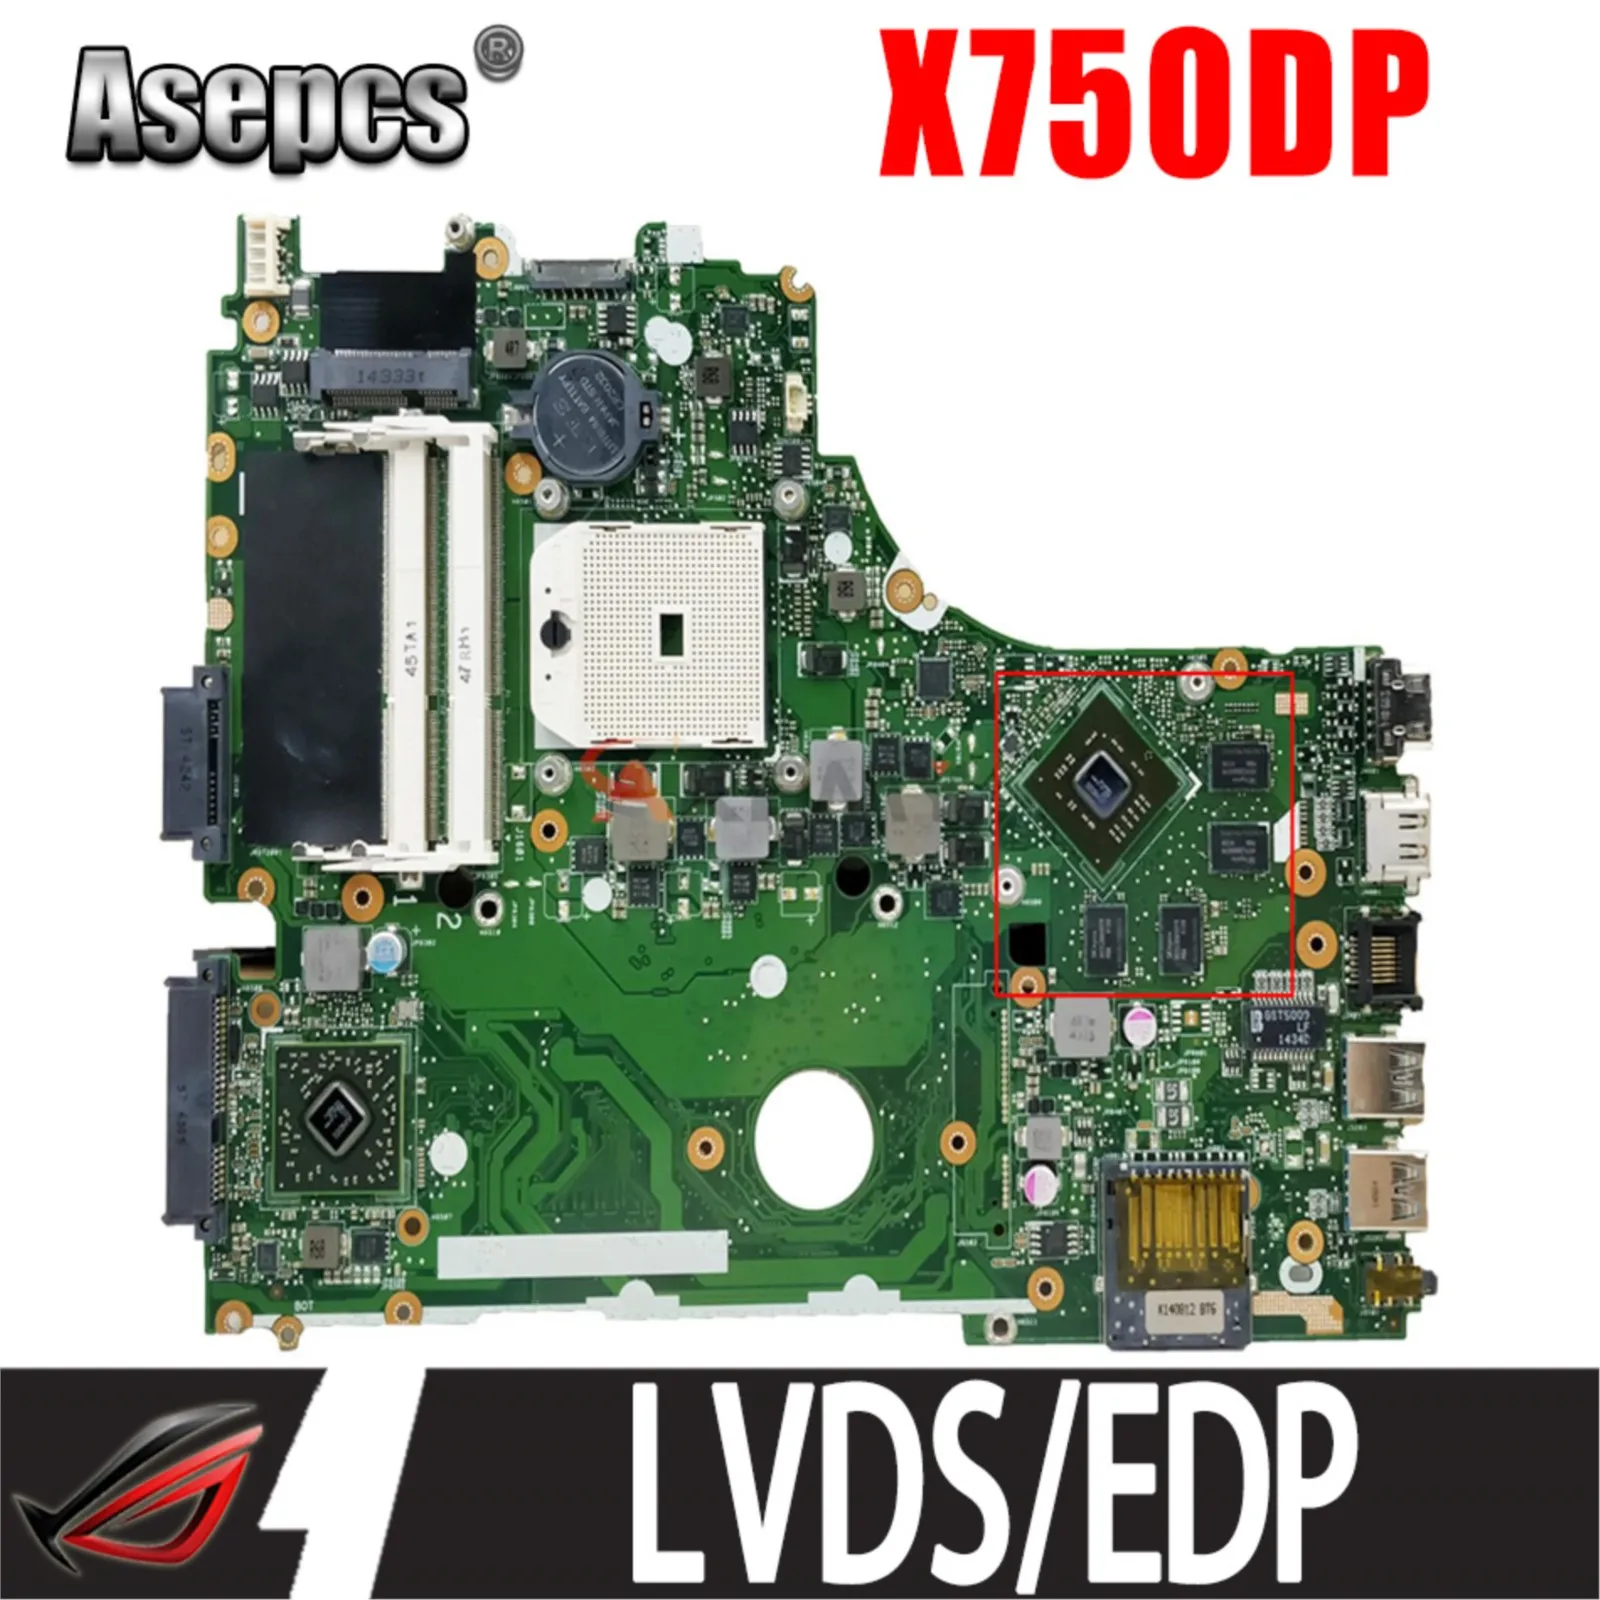 

X750DP Notebook Mainboard LVDS EDP for ASUS X550 K550D X550D K550DP X550DP X750D Laptop Motherboard rev2.0